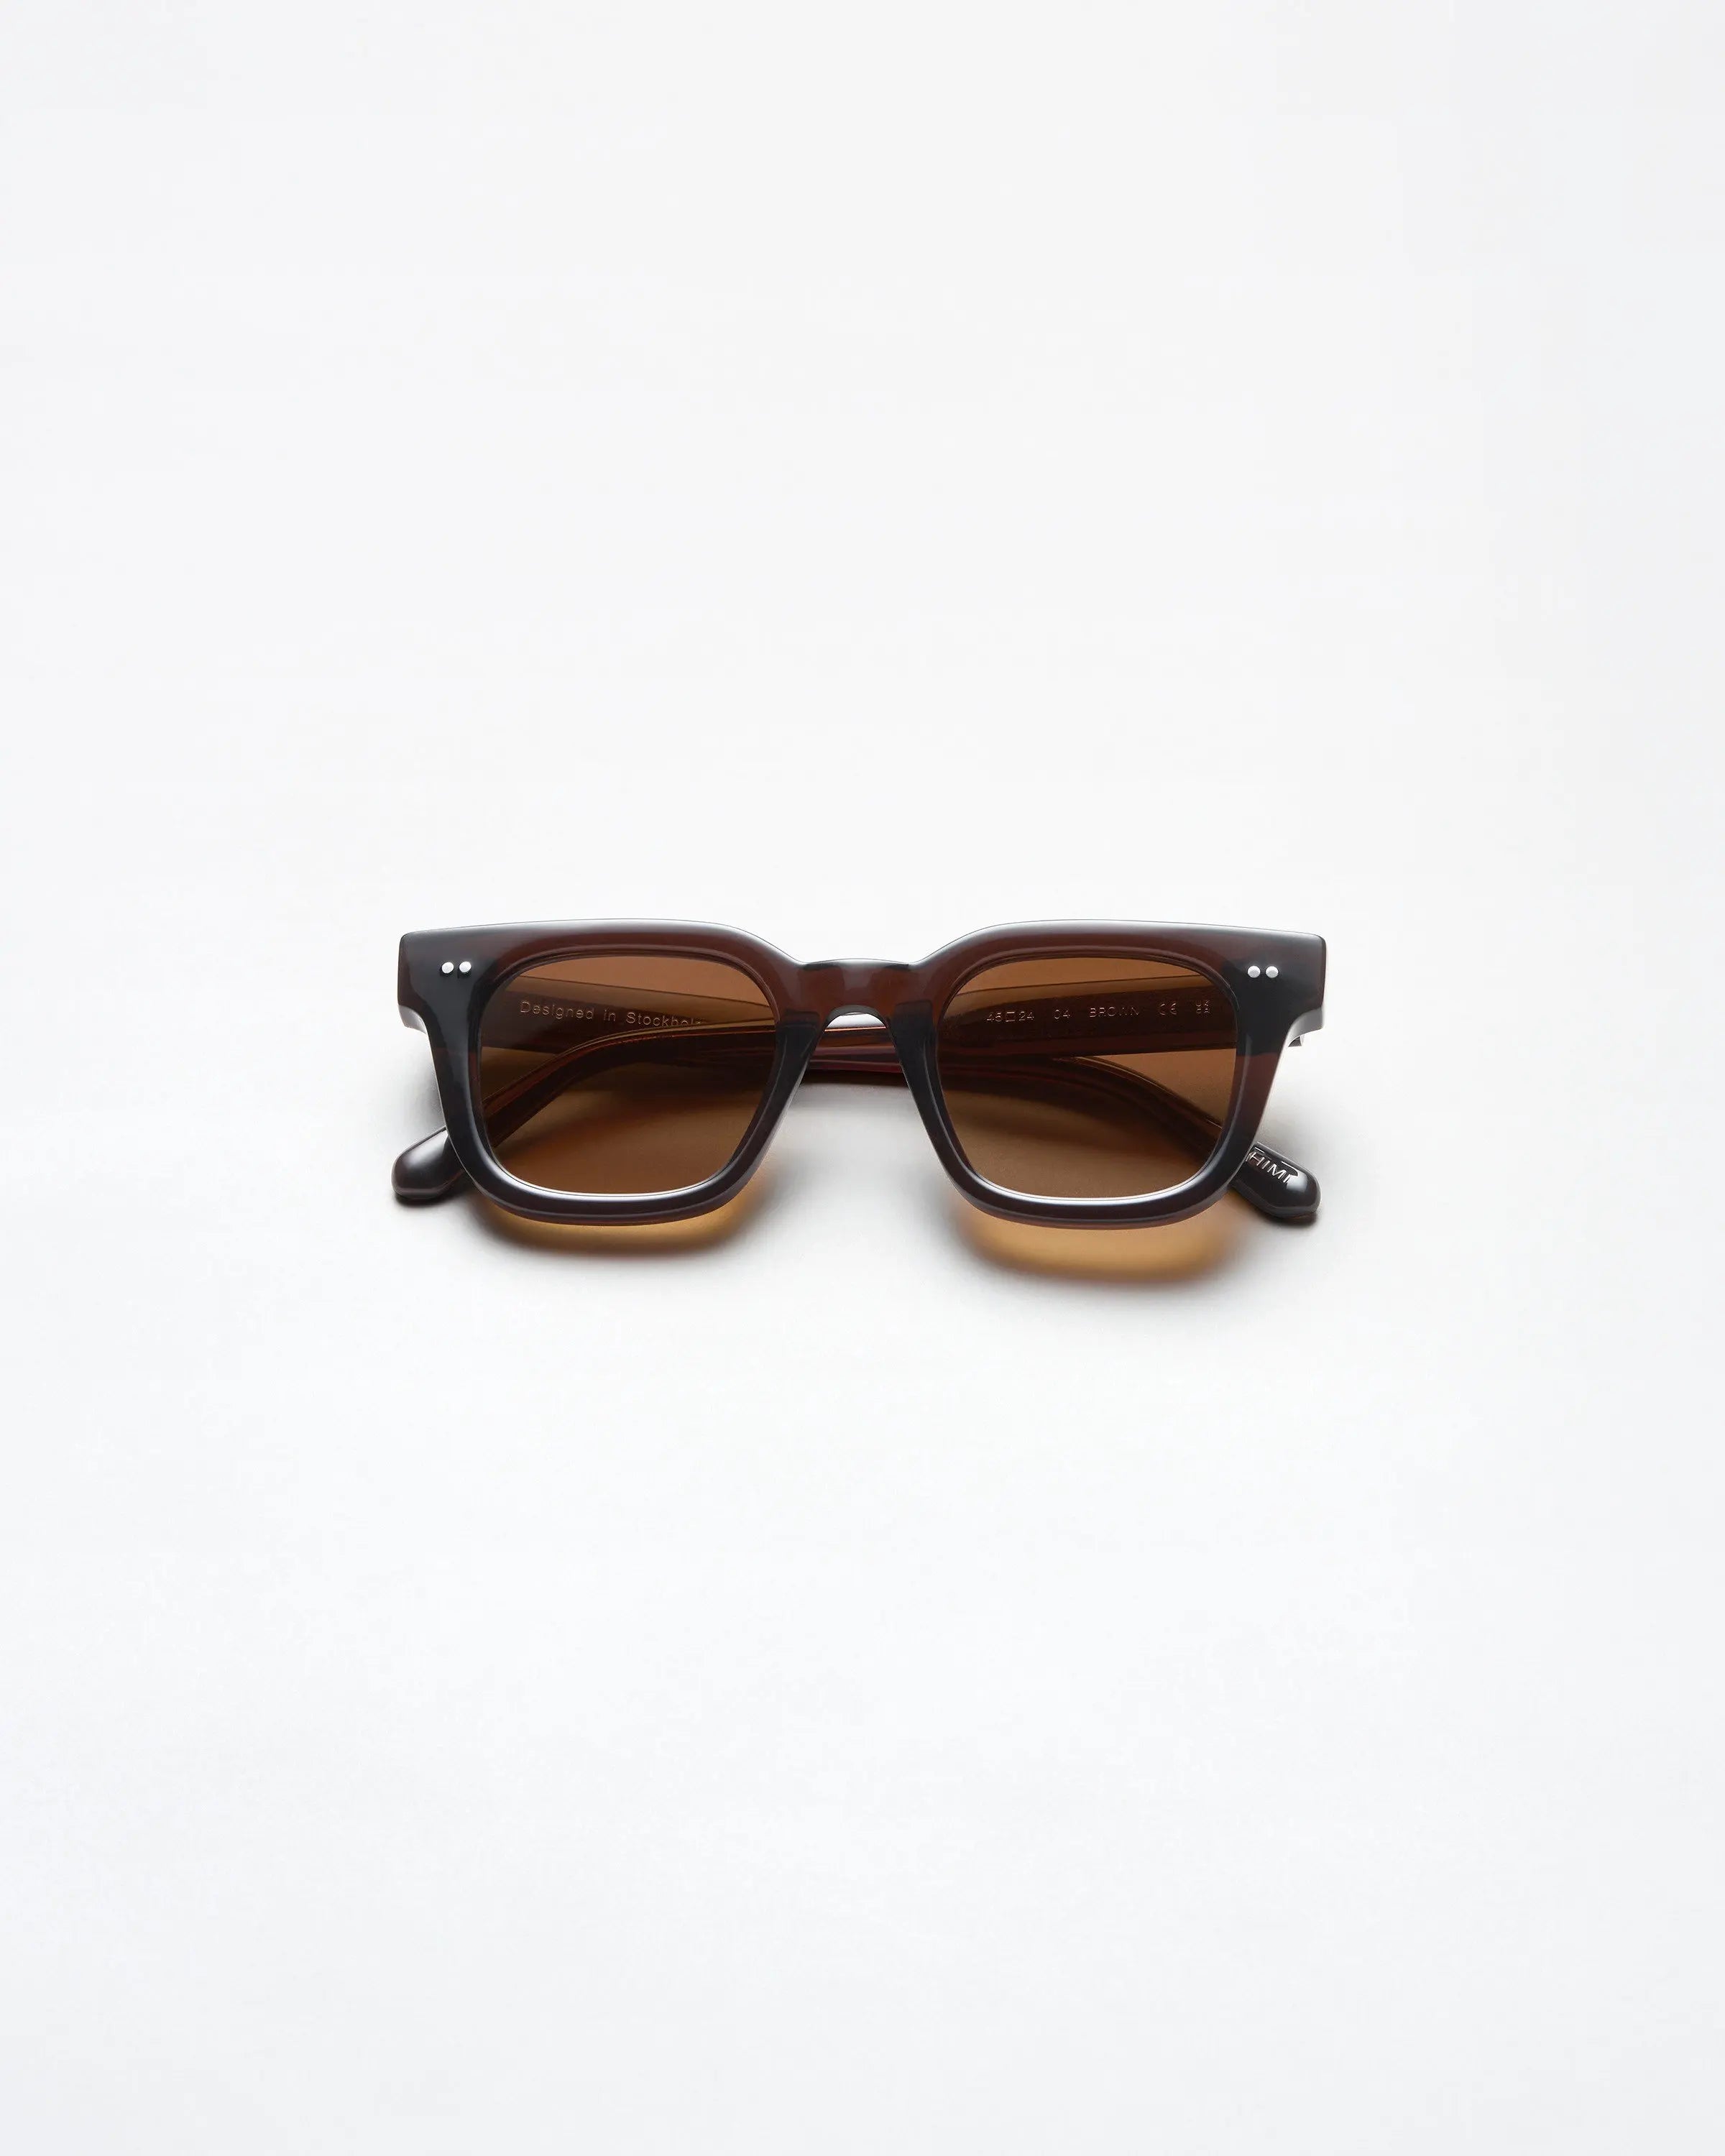 CHIMI 04 Sunglasses